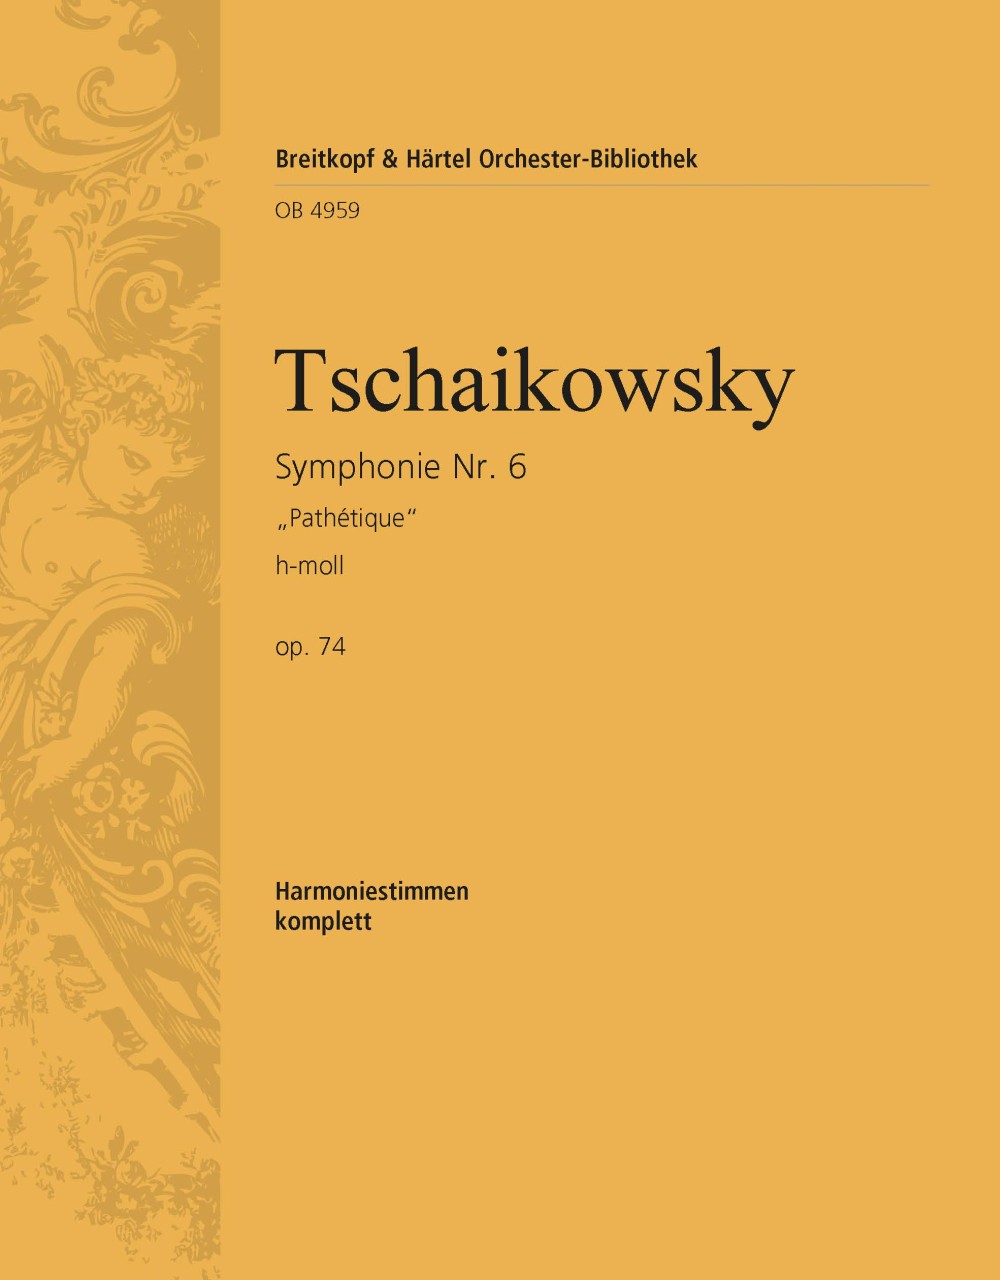 Tchaikovsky: Symphony No. 6 in B Minor, Op. 74